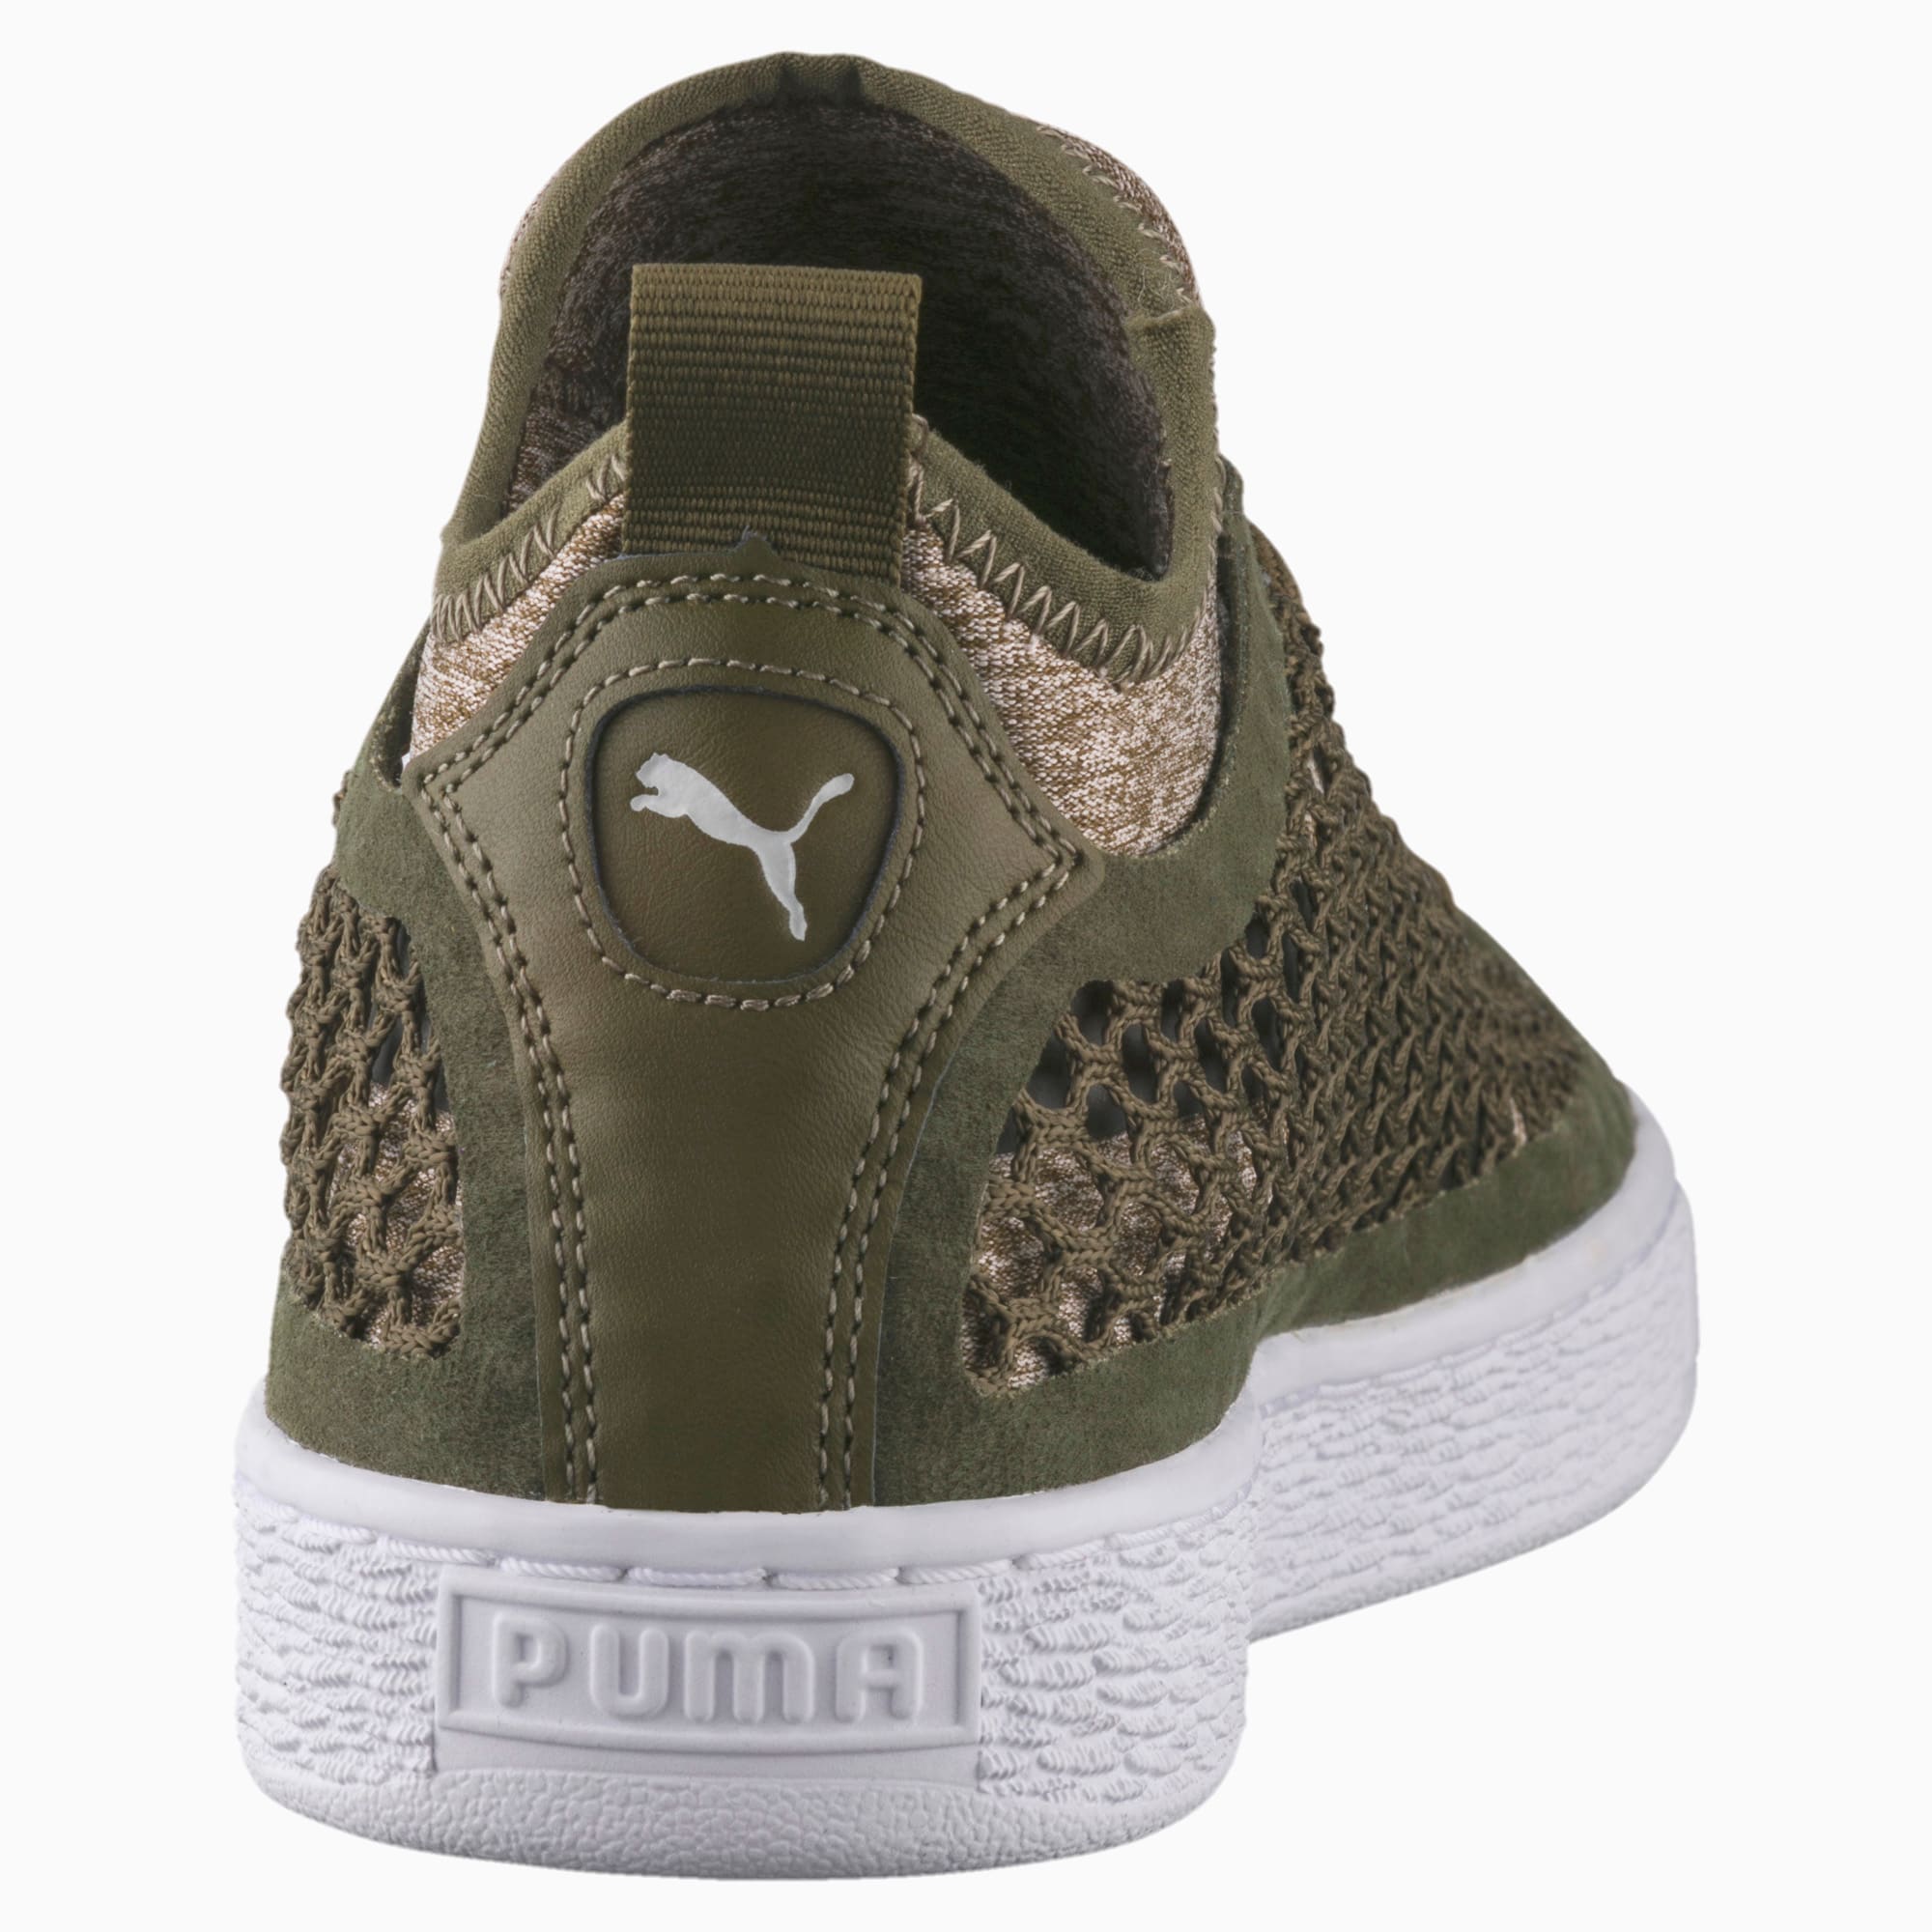 puma basket classic netfit shoes